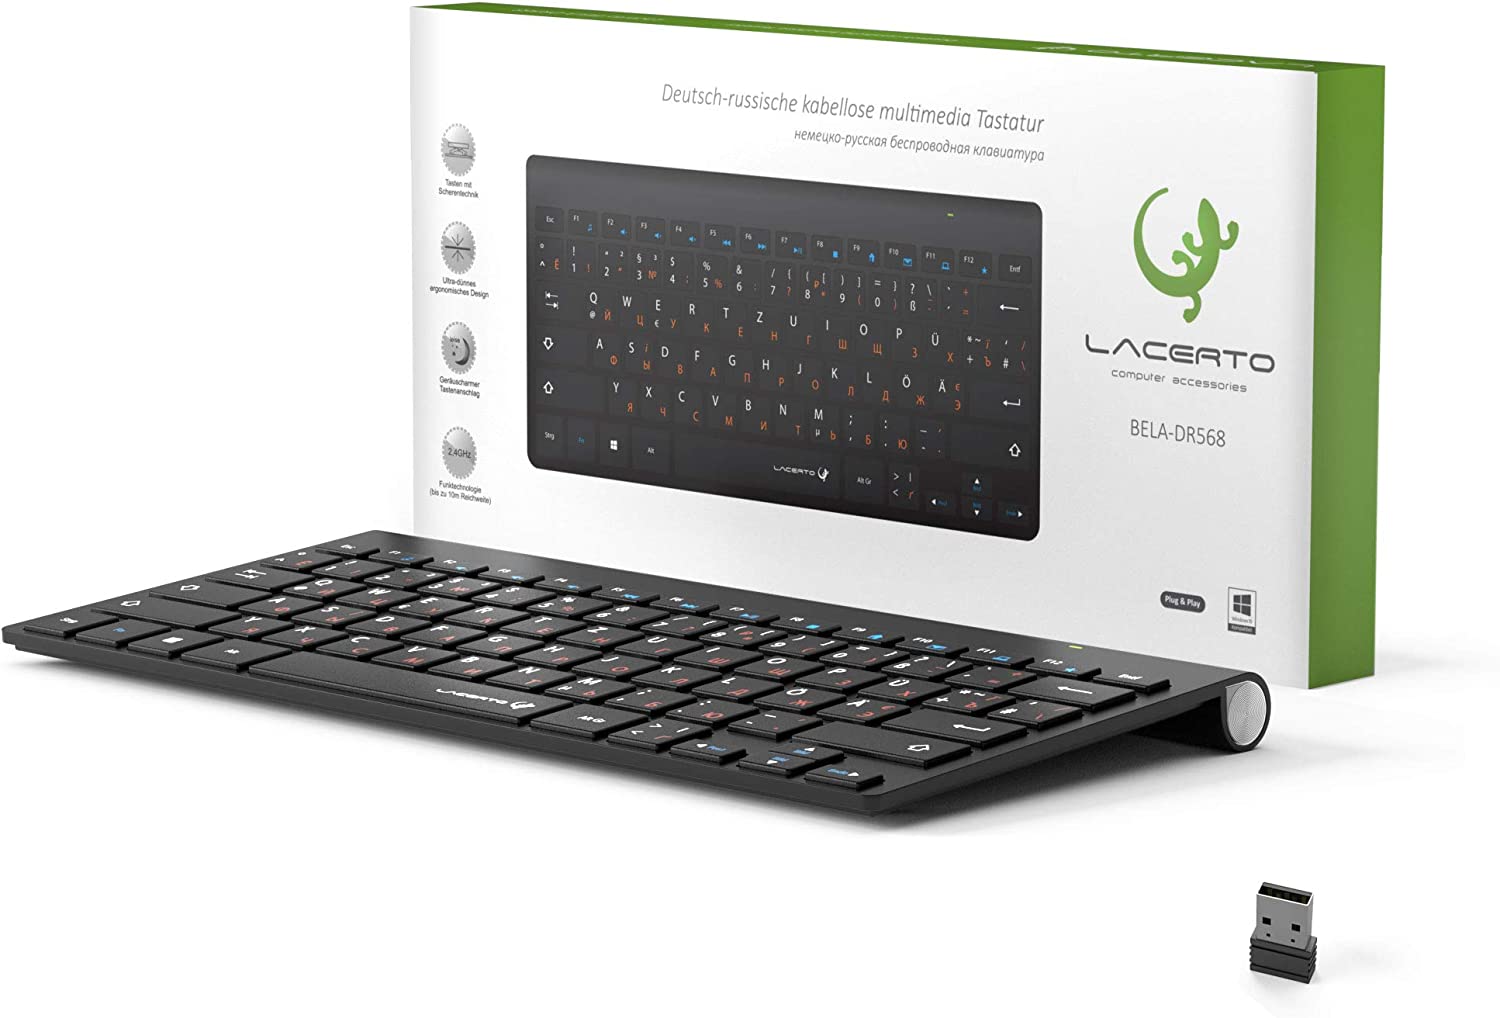 Lacerto® | Bilinguale Russisch-Deutsche Kabellose 2,4 GHz Multimedia Tastatur, Russian-German Wireless Multimedia Keyboard | BELA-DR568 | Matt Schwarz